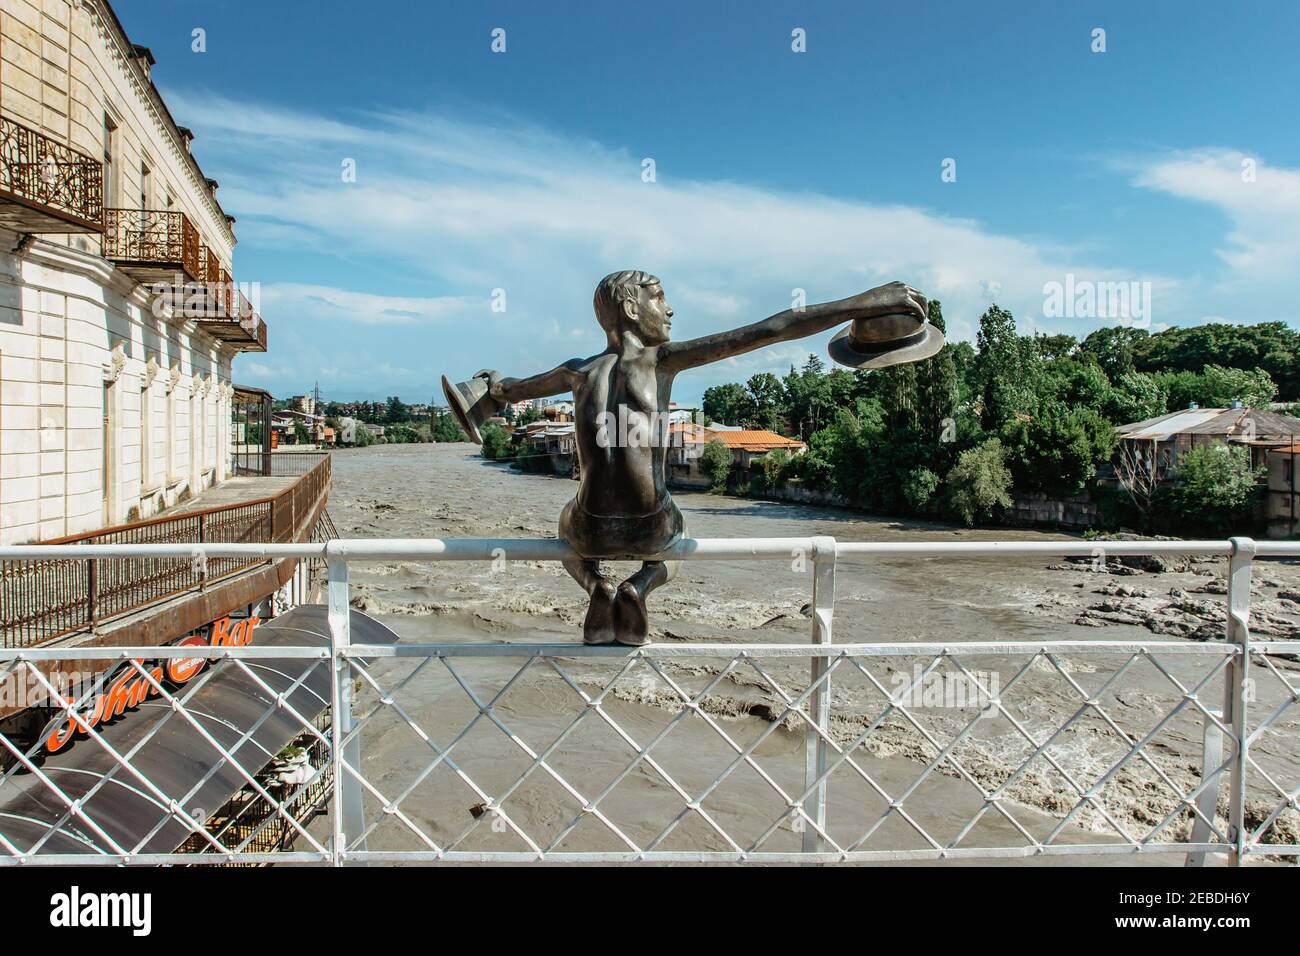 Kutaisi, Georgia - June 8, 2019. Bronze Statue of Boy with hats in his hands on White Bridge,Tetrikhidi, across river Rioni. Sculpture of happy boy Stock Photo